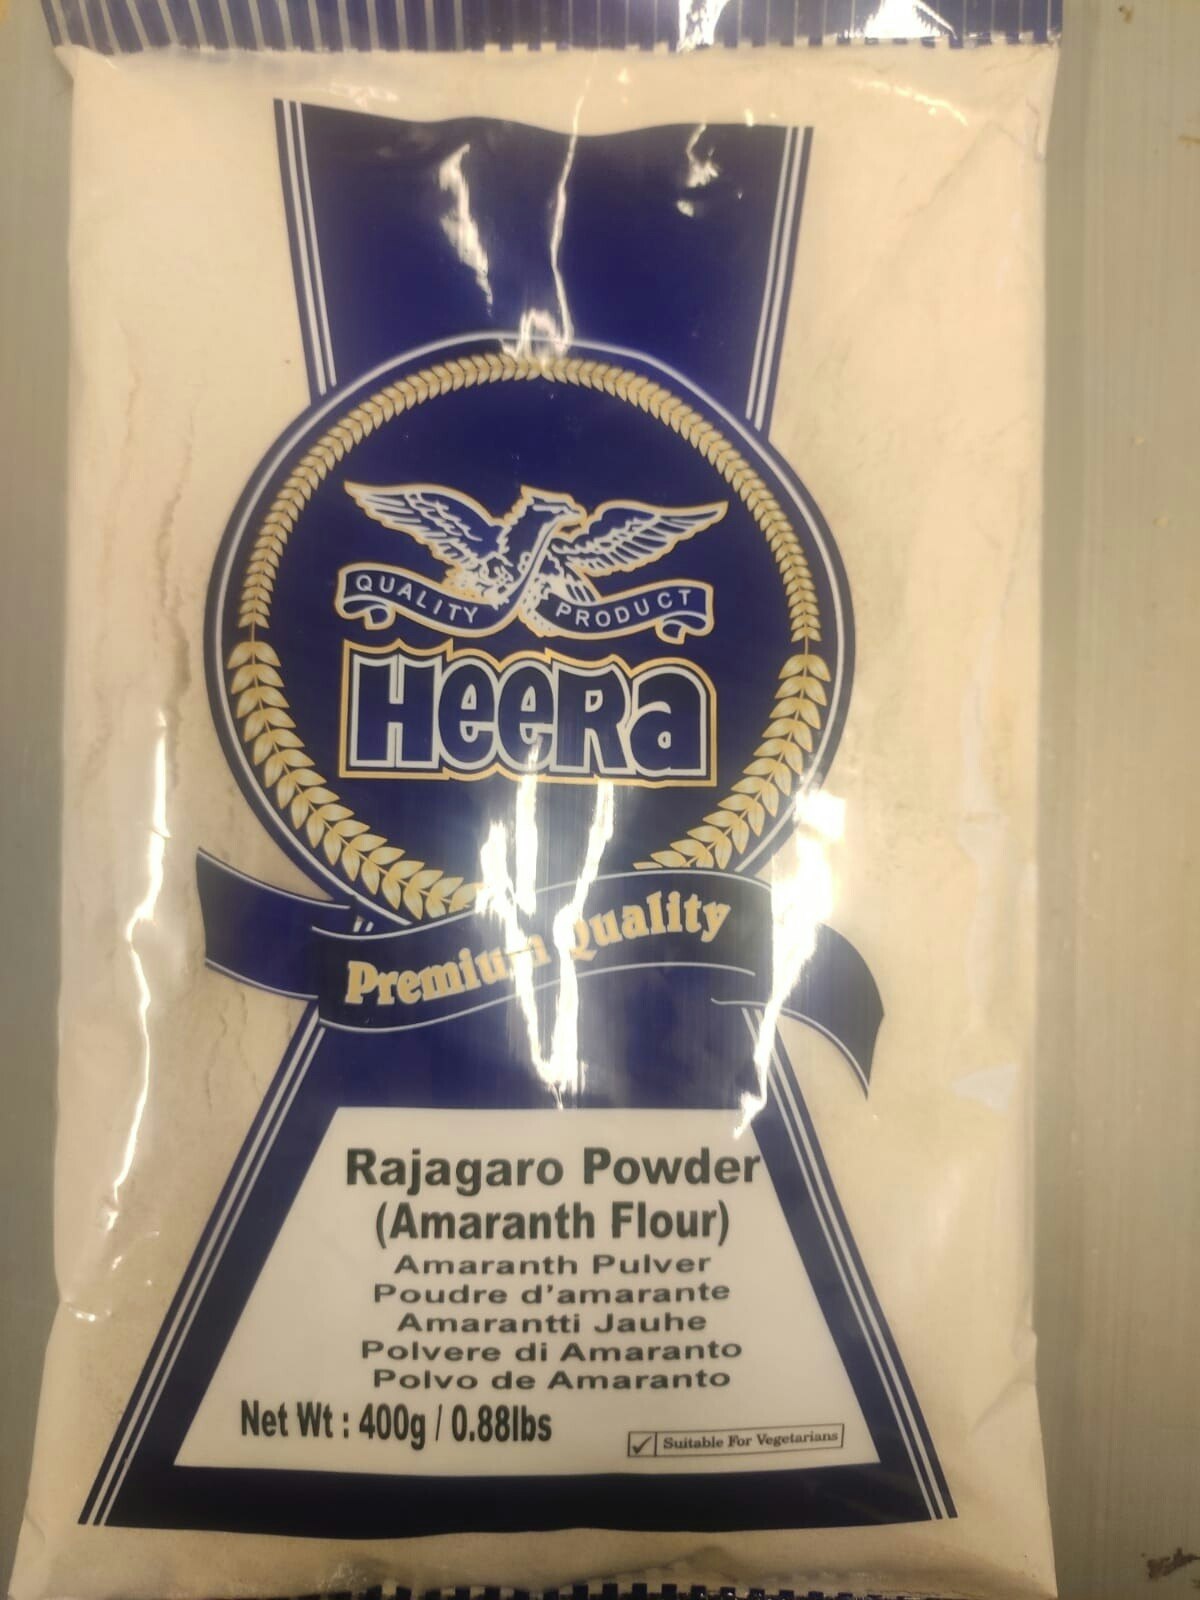 Rajagaro (Amaranth Flour) Powder 400g (Heera)